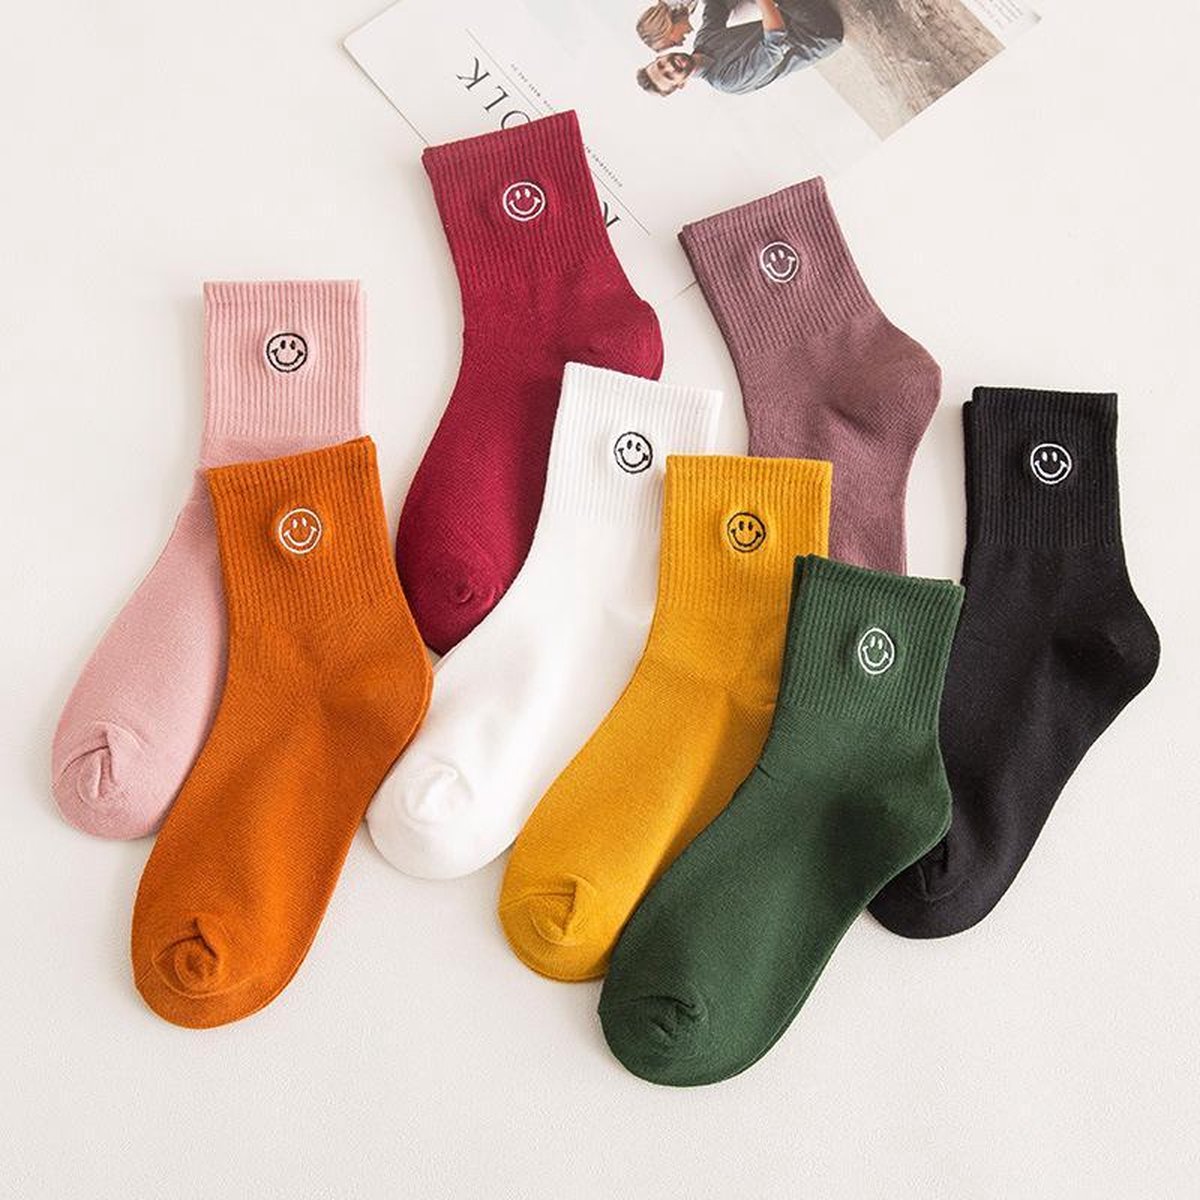 Smiley Socks - Smiling Socks® 7-Pack - Vrolijke Sokken - Naadloos Sokken - Leuke sokken - Maat 35-43 - Hardloopsokken - Kleurvol